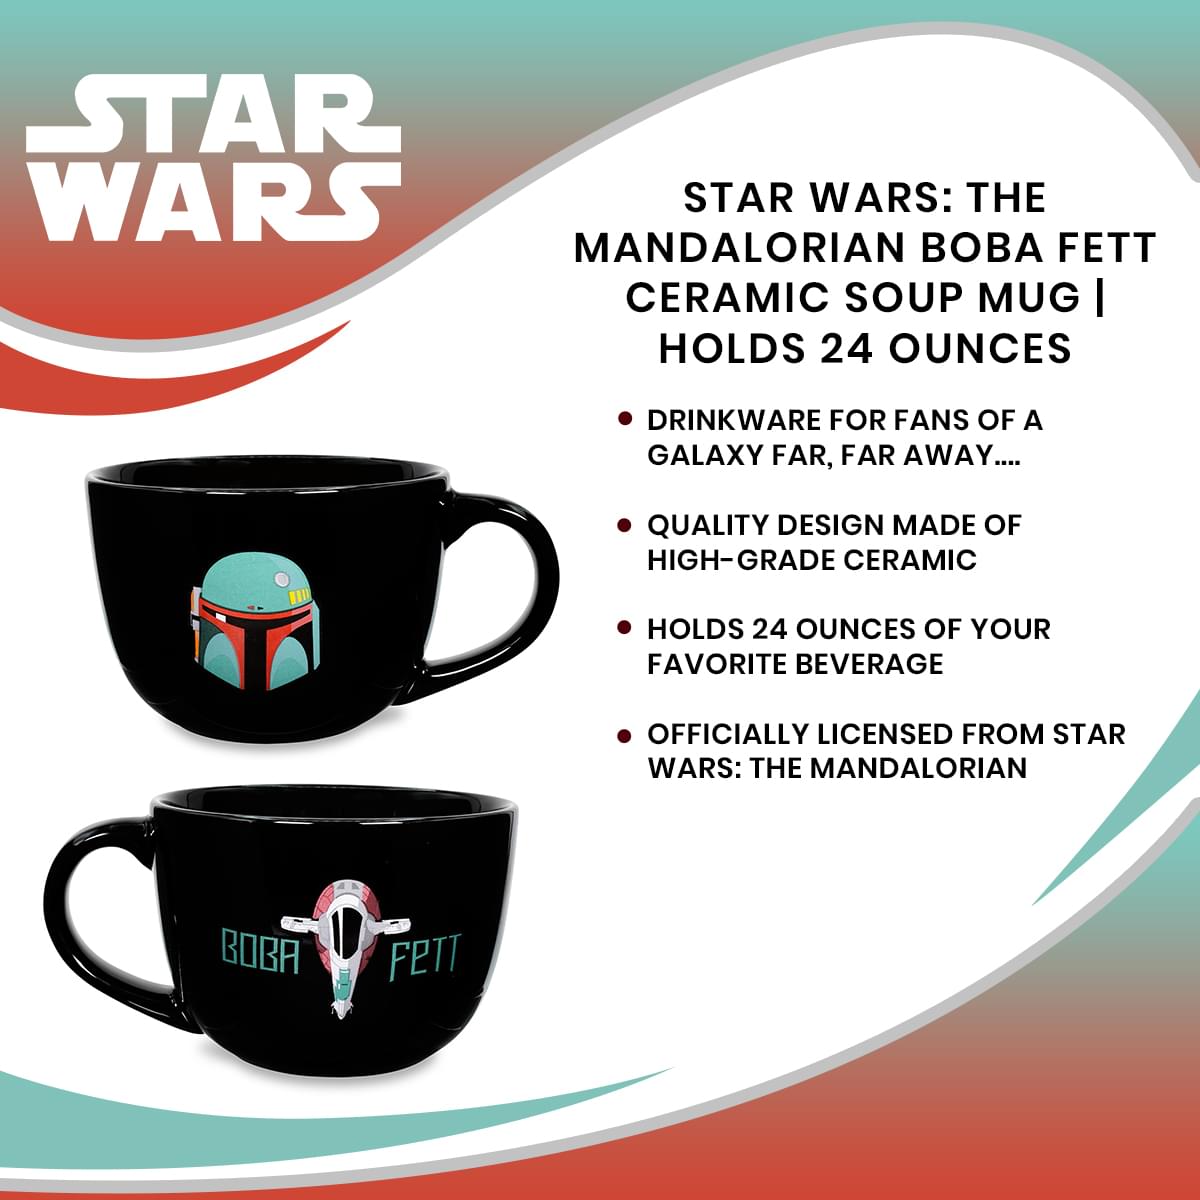 Star Wars Boba Fett 24oz Ceramic Soup Mug